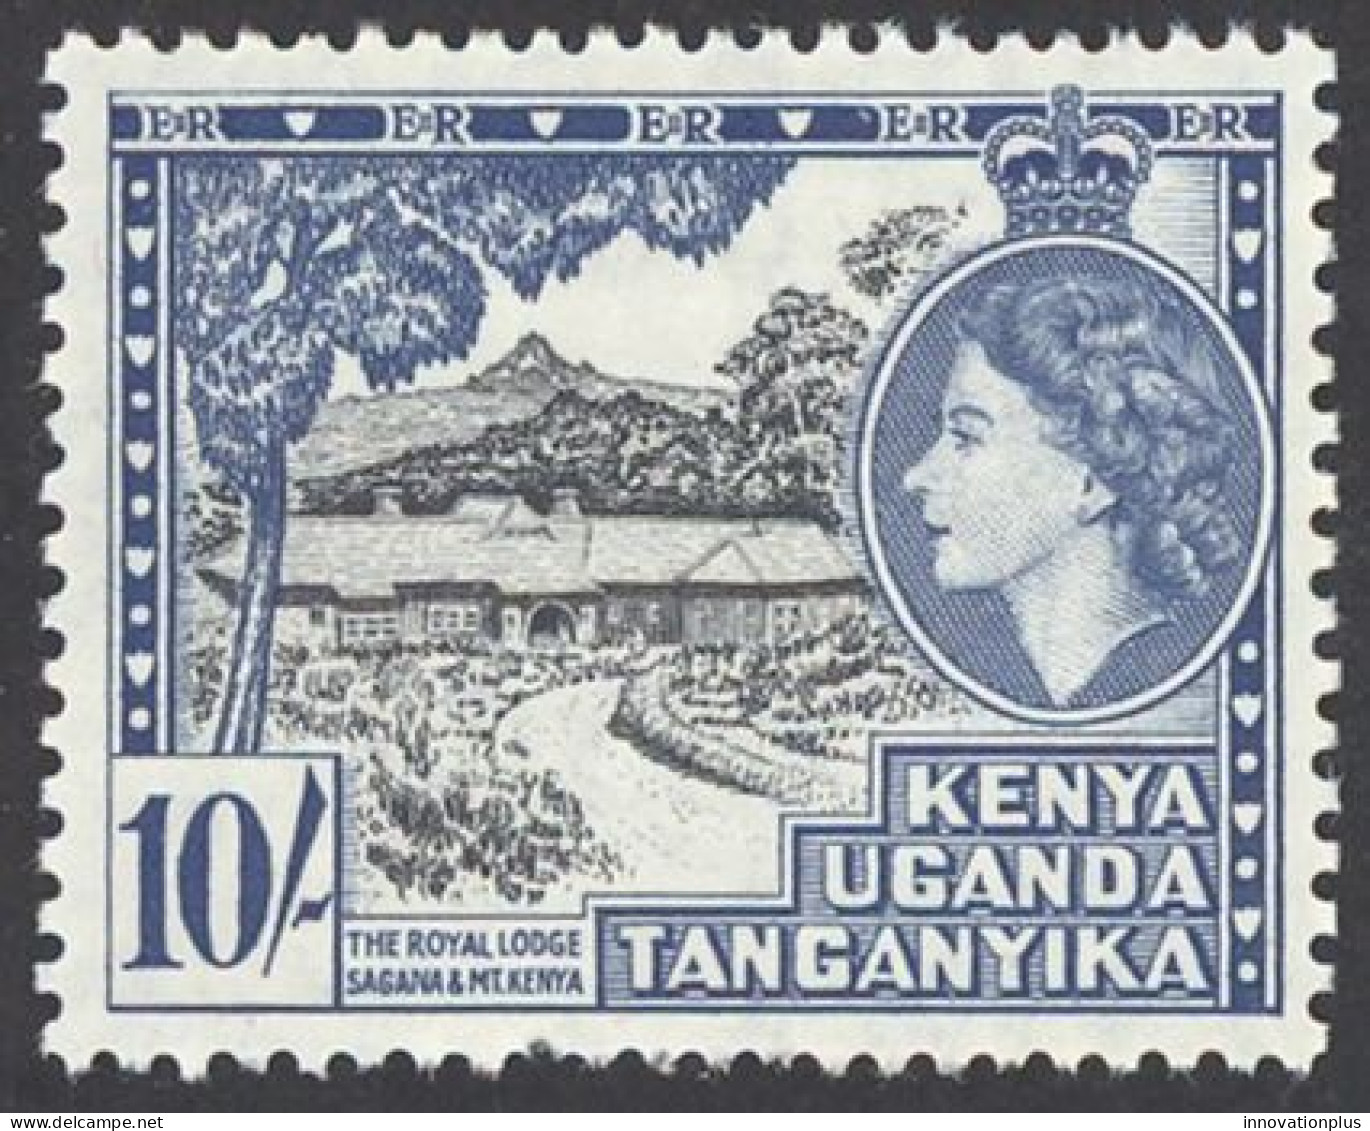 Kenya, Uganda, Tanzania Sc# 116 MNH 1954-1959 10sh Royal Lodge, Sagana - Kenya, Uganda & Tanzania